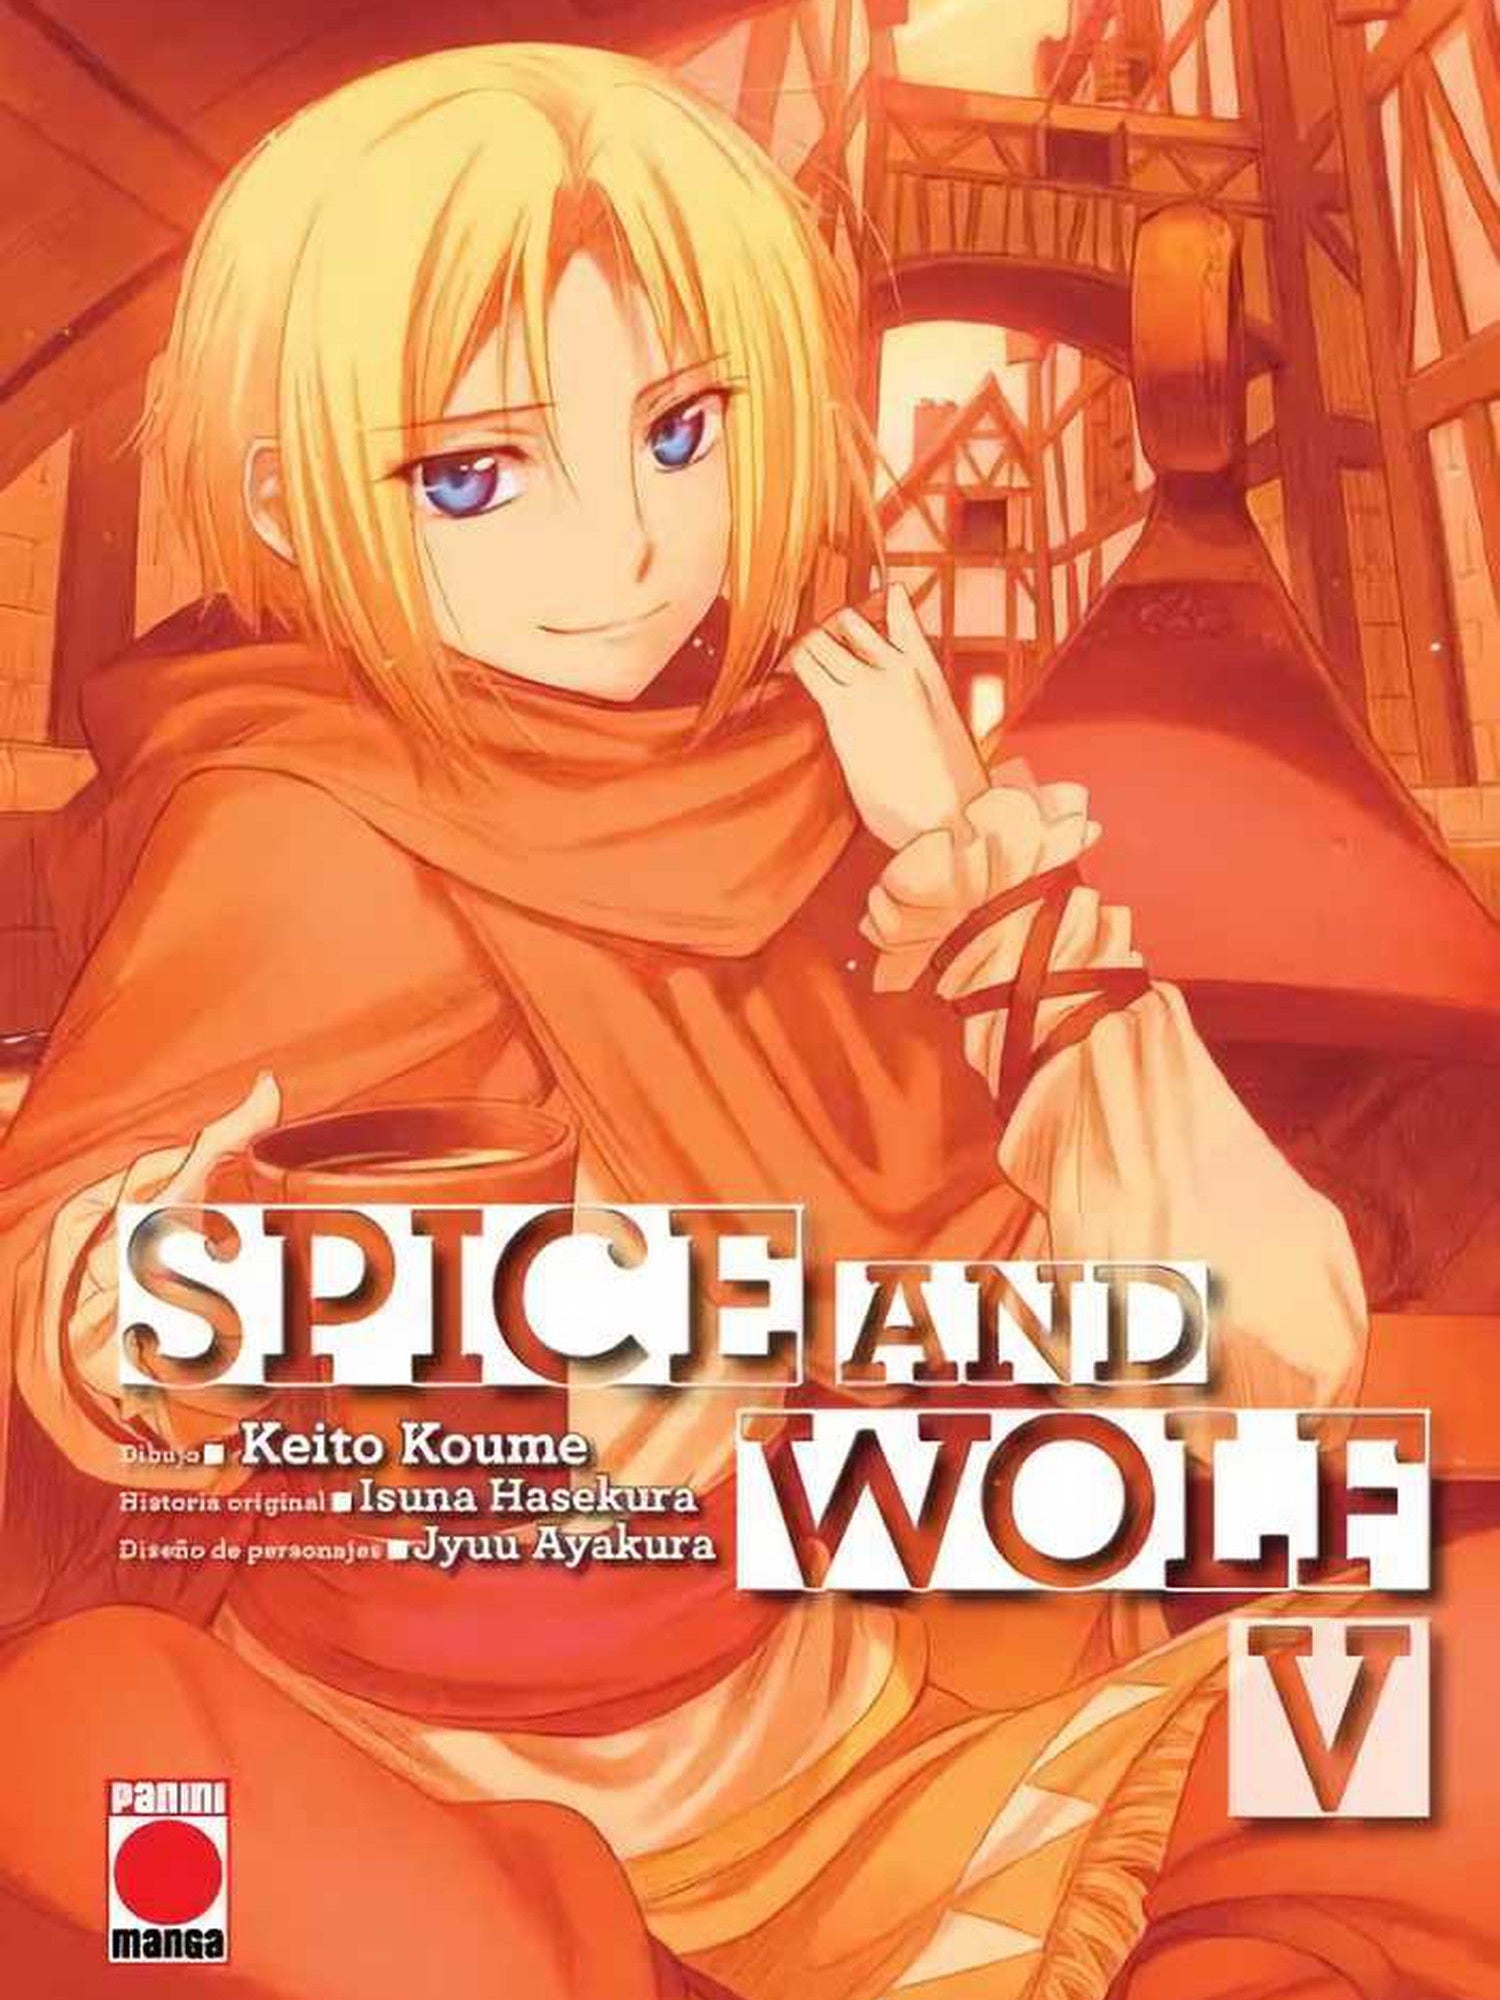 Spice and Wolf 5 Panini España ENcuadrocomics